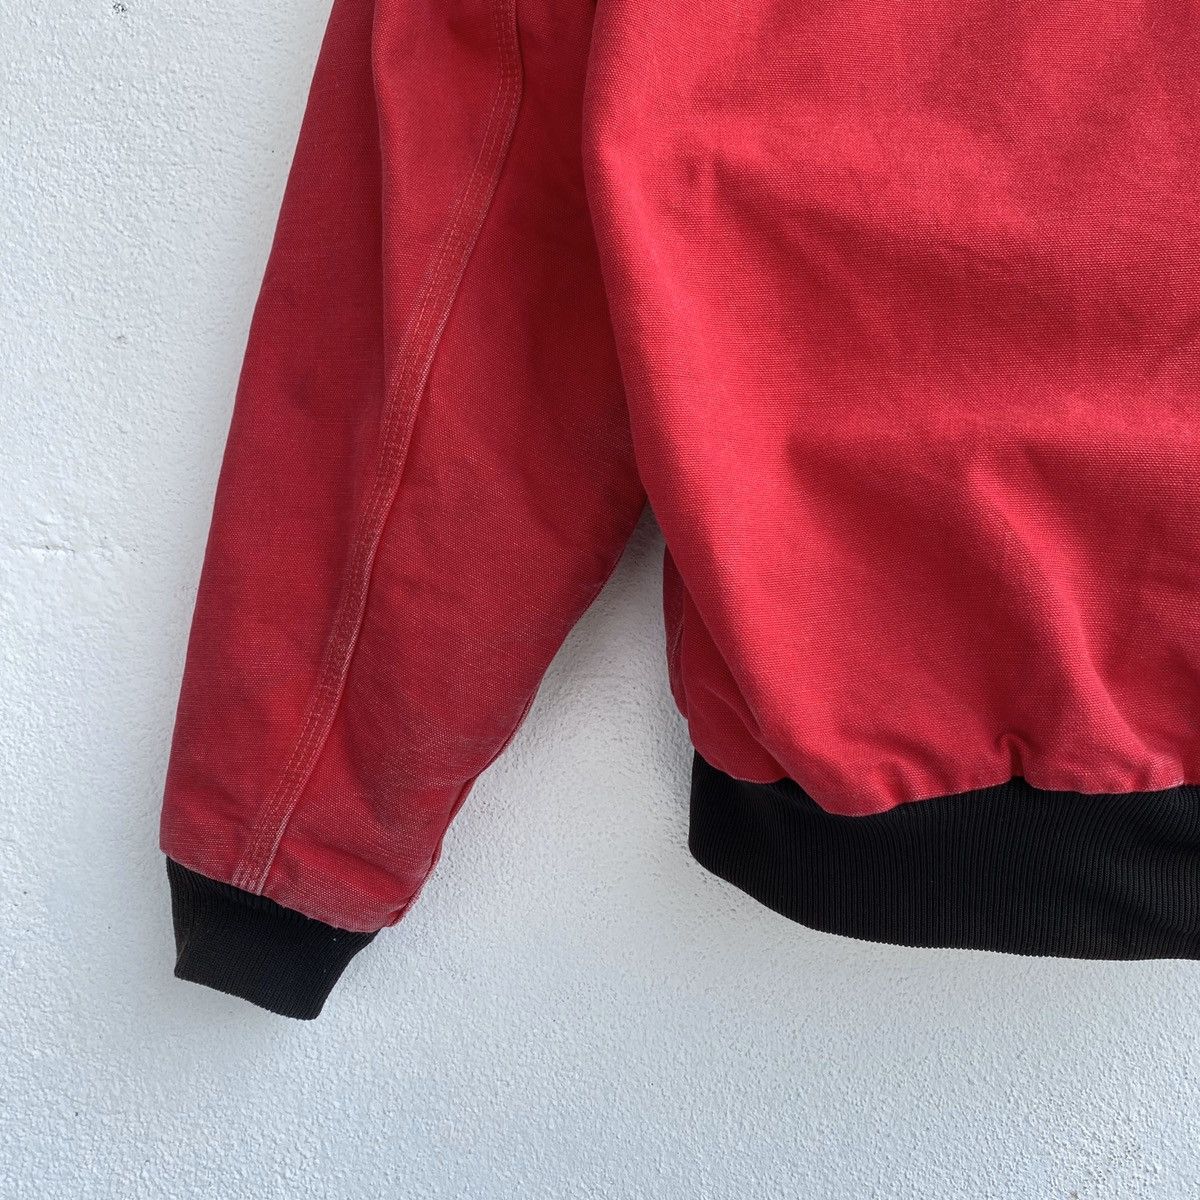 Carhartt Carhartt Hooded Zip Red Jacket Size US M / EU 48-50 / 2 - 6 Preview